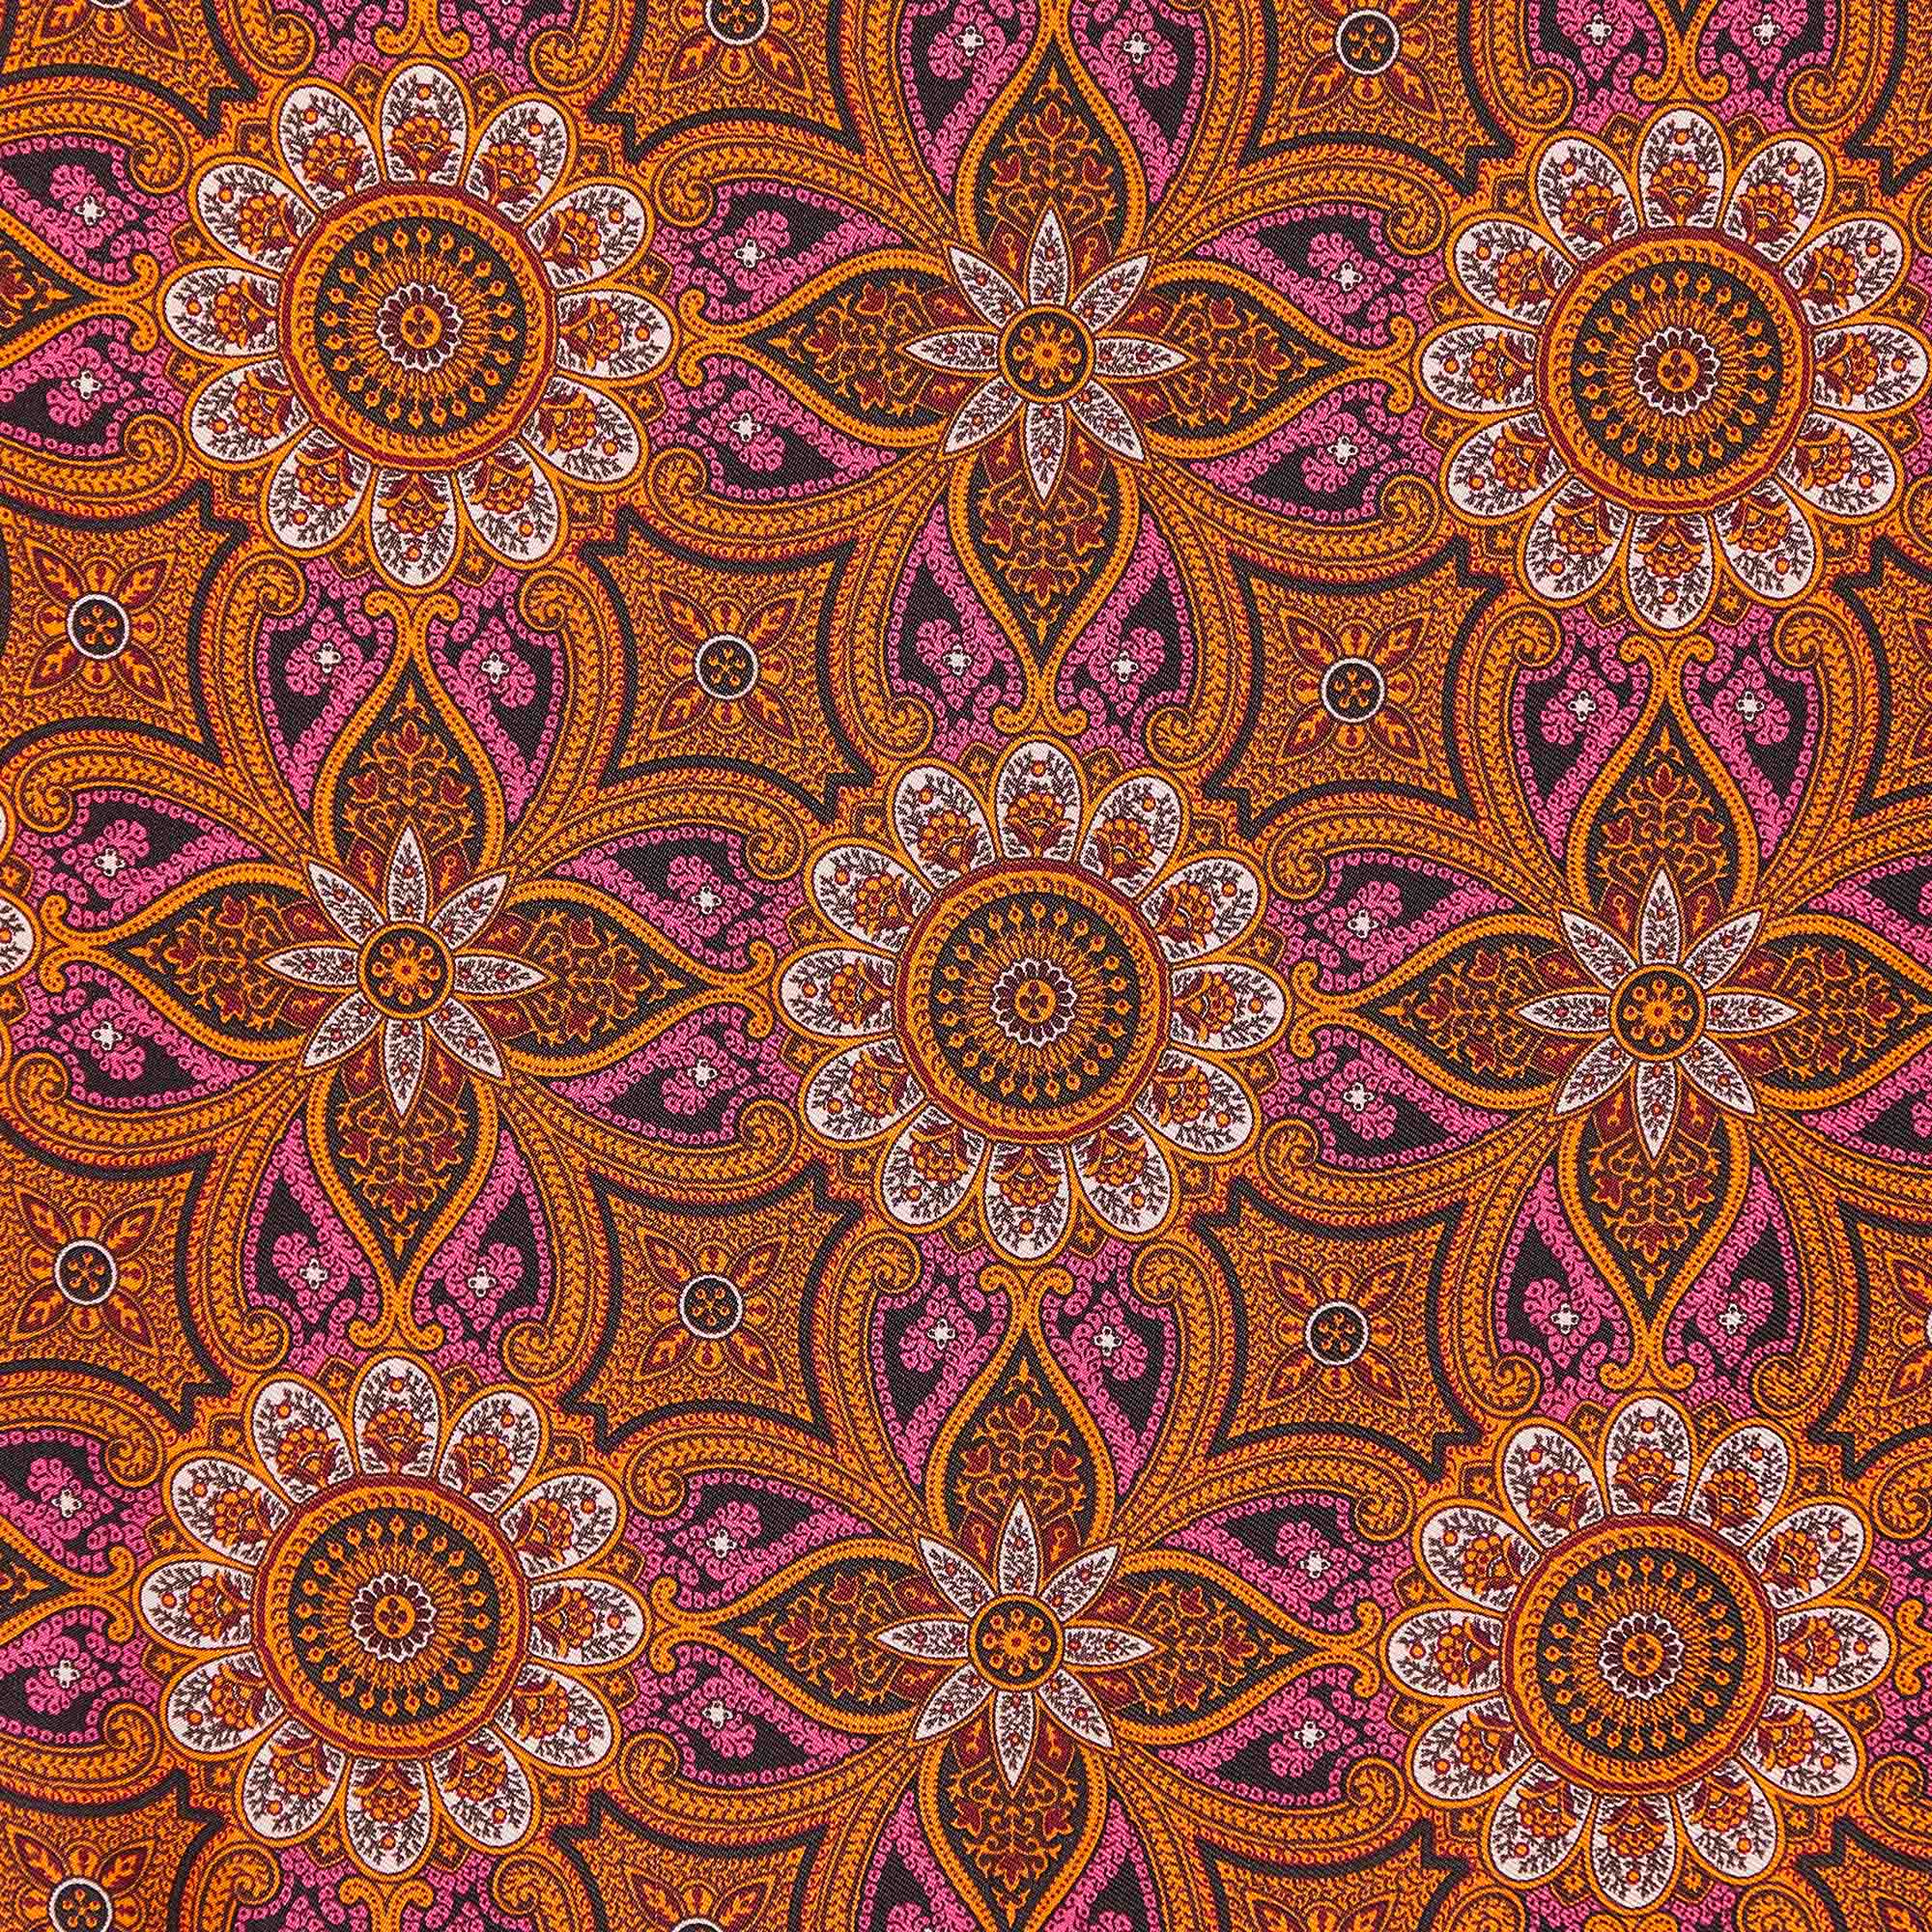 Hermes Multicolor Paisley Printed Silk Square Handkerchief Hermes